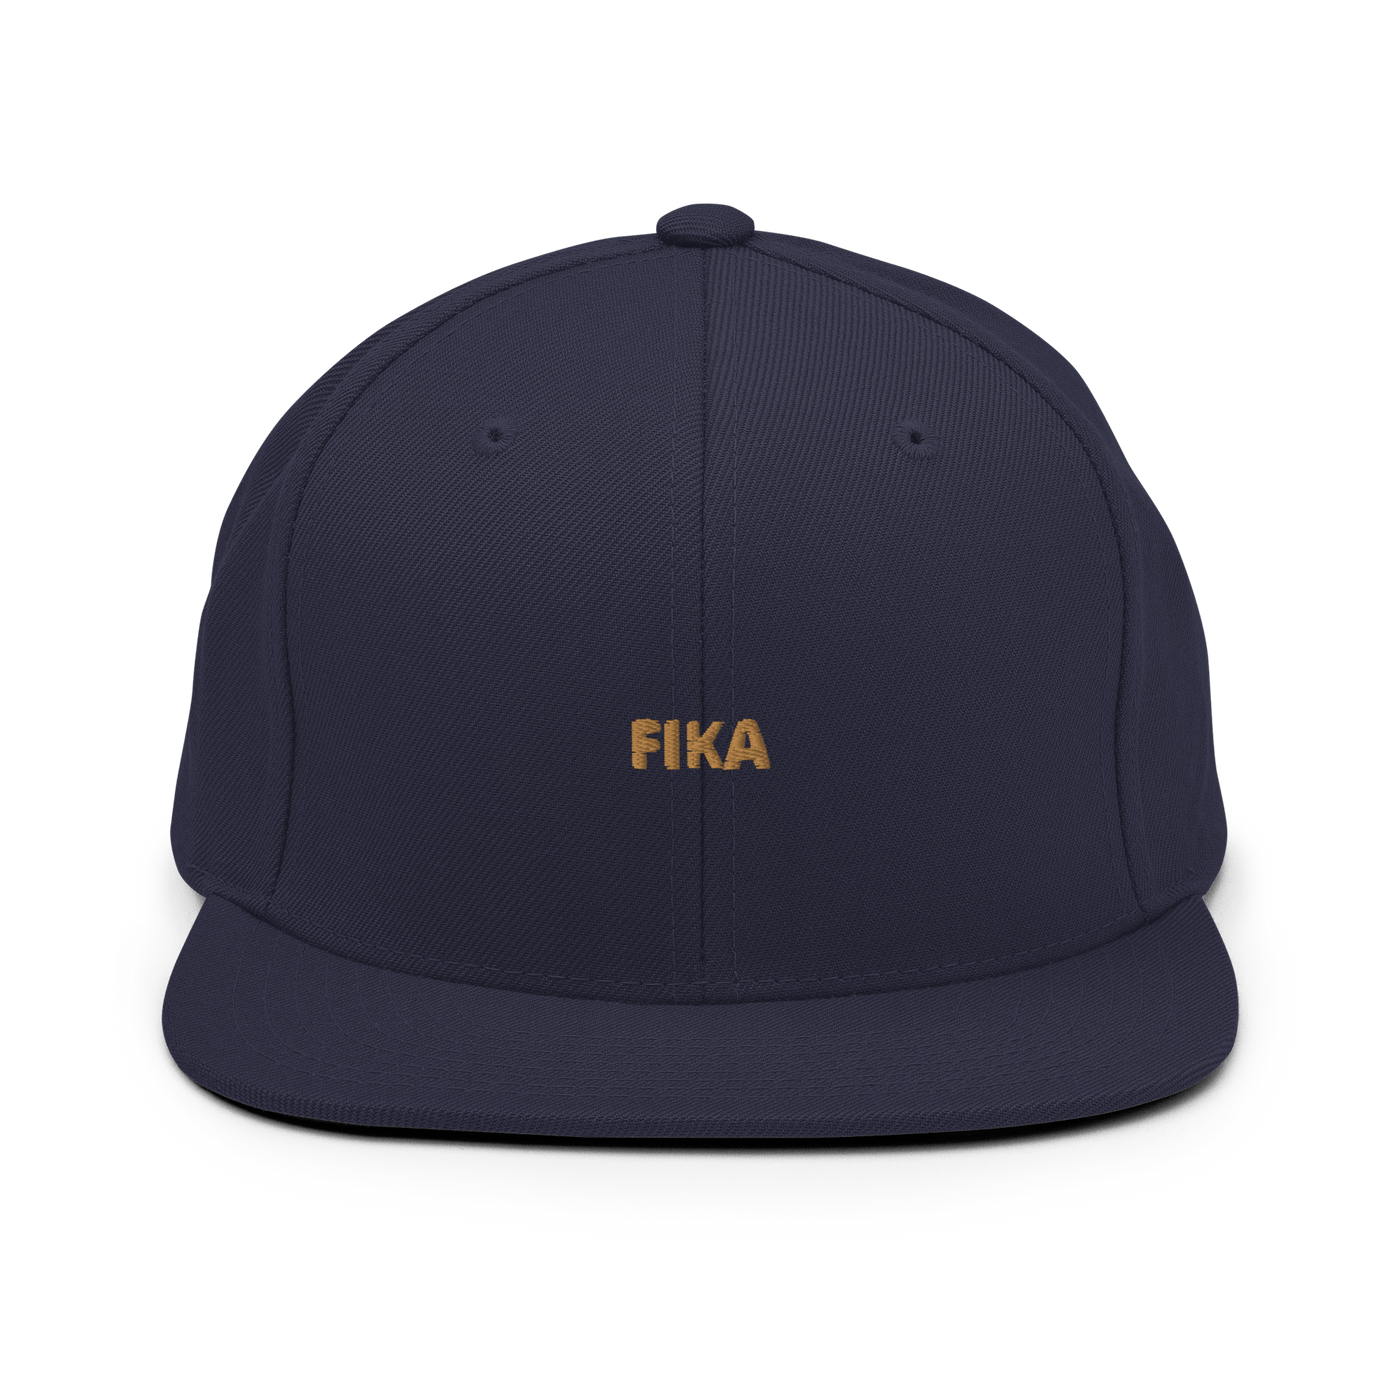 FIKA Snapback - Maroon - - Just Another Cap Store